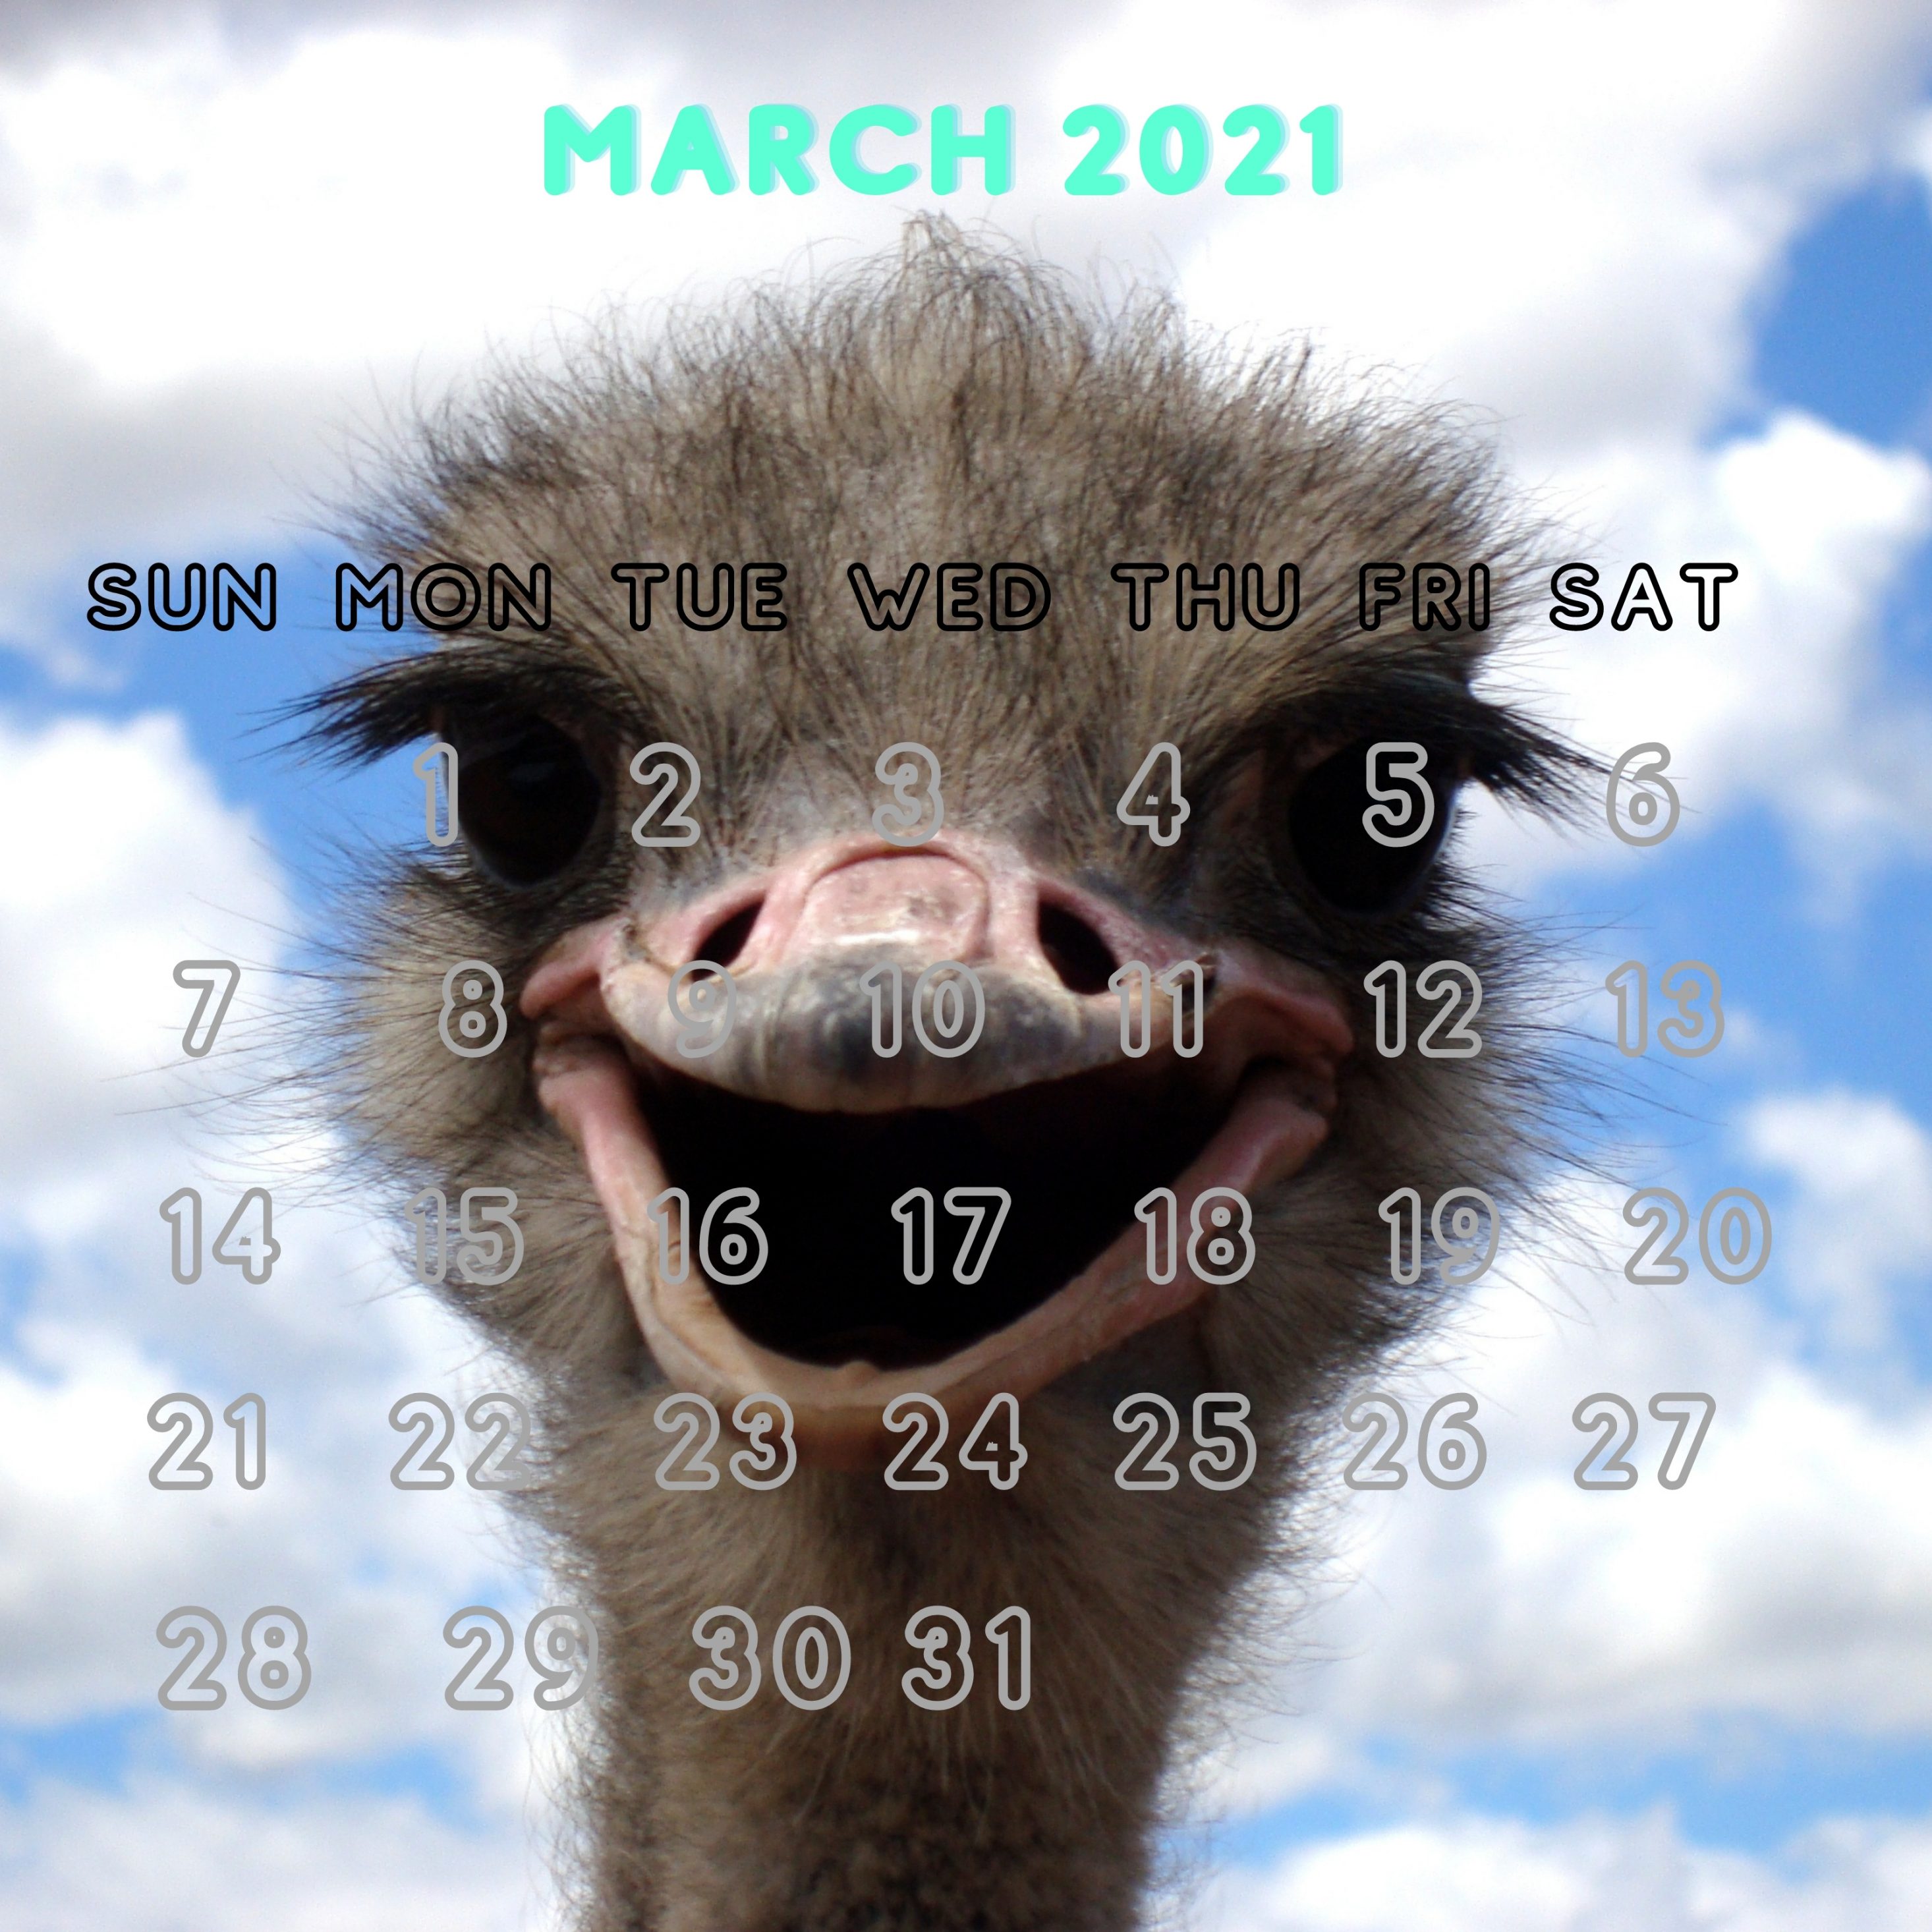 2932x2932 iPad Pro wallpaper 4k March 2021 Ostrich Smiling iPad Wallpaper 2932x2932 pixels resolution